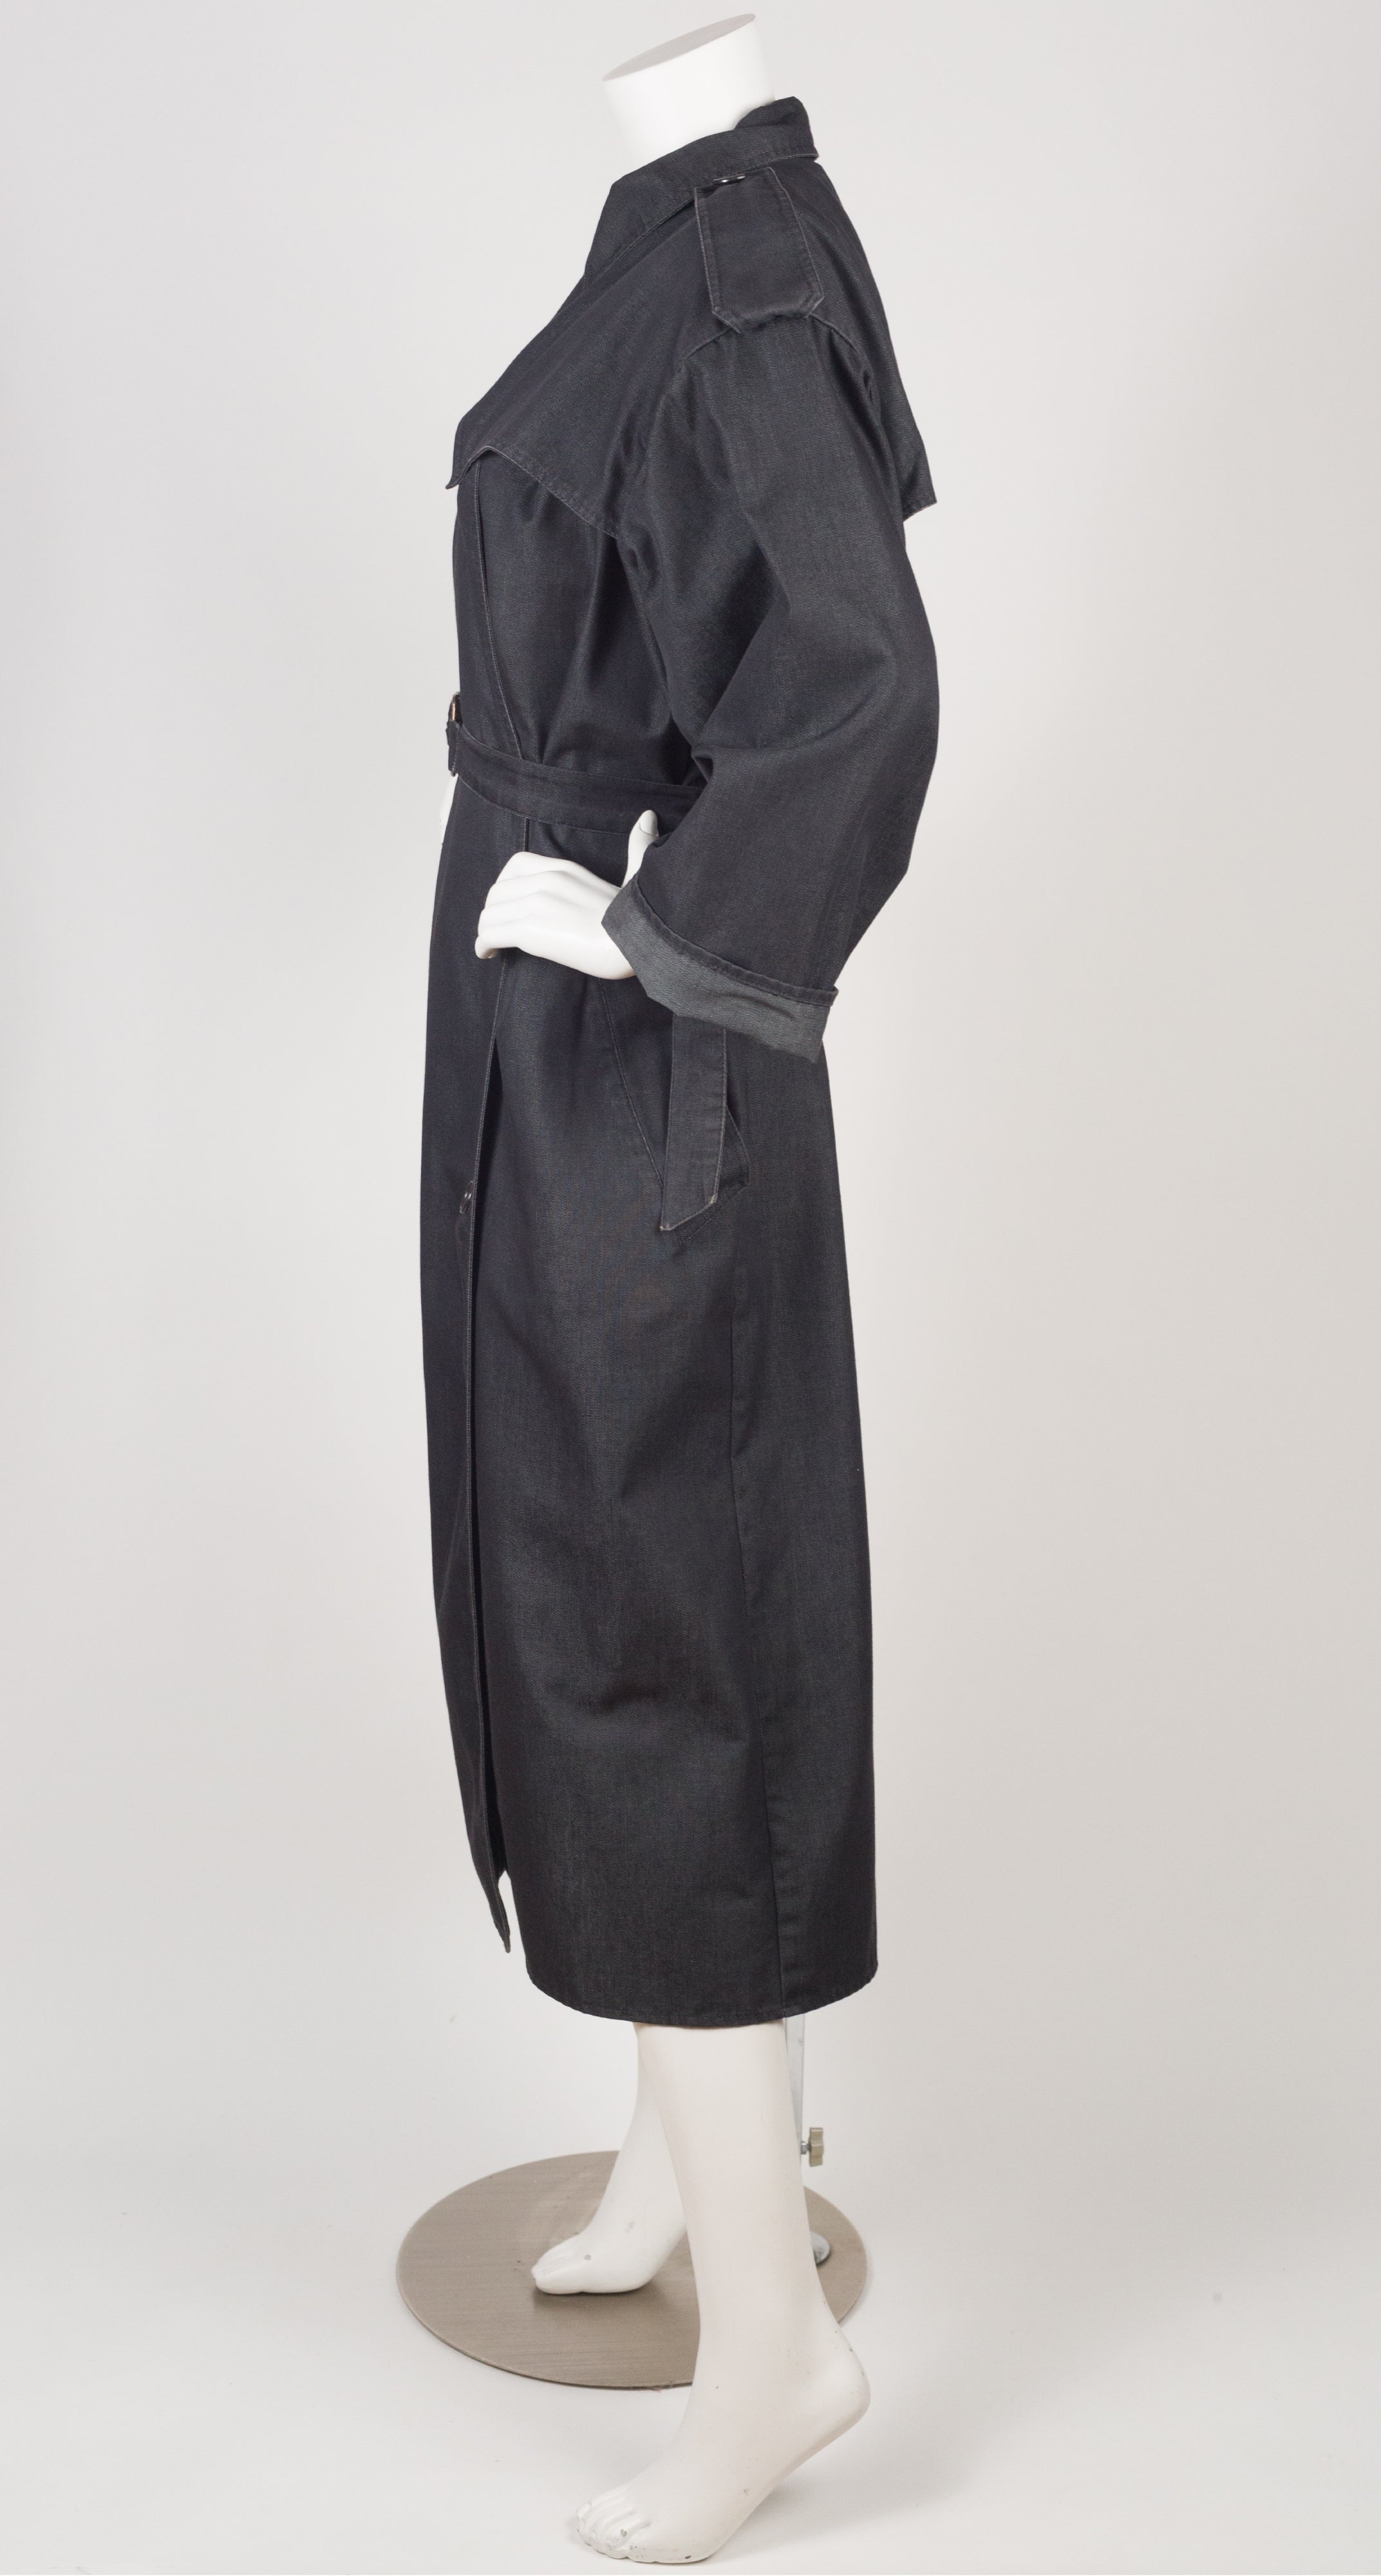 80's vintage denim trench coat